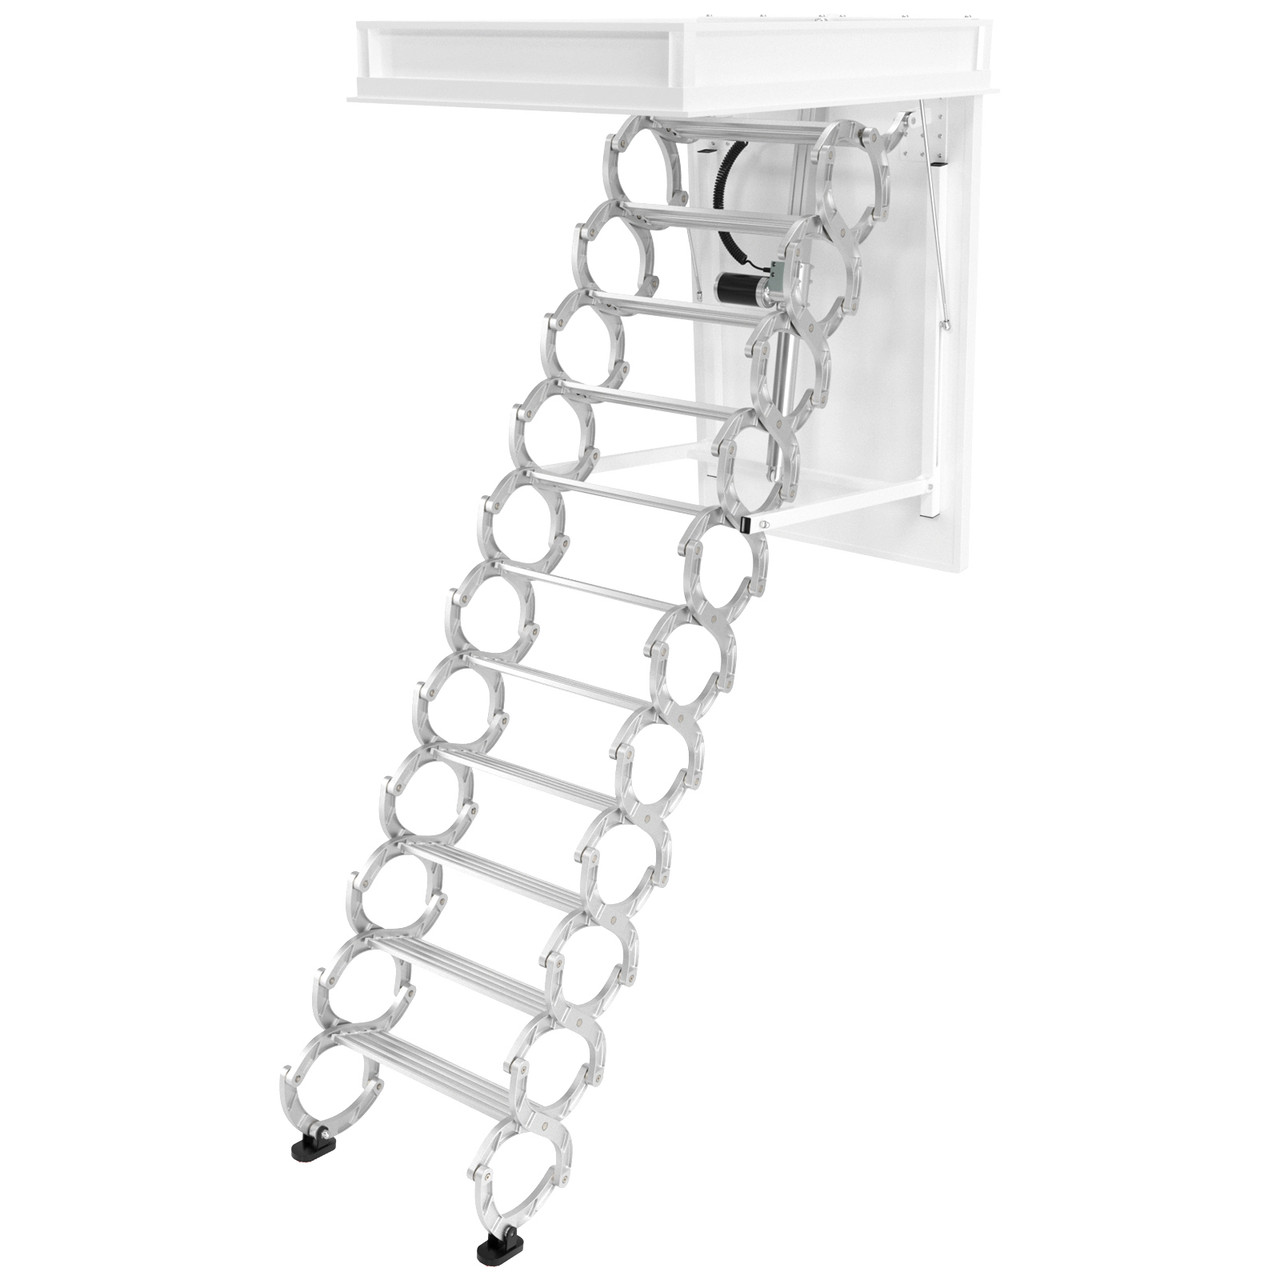 Upgrate Ultralight Smooth Electirc Attic Ladder Remote For Loft 39.37"*27.5" 3M